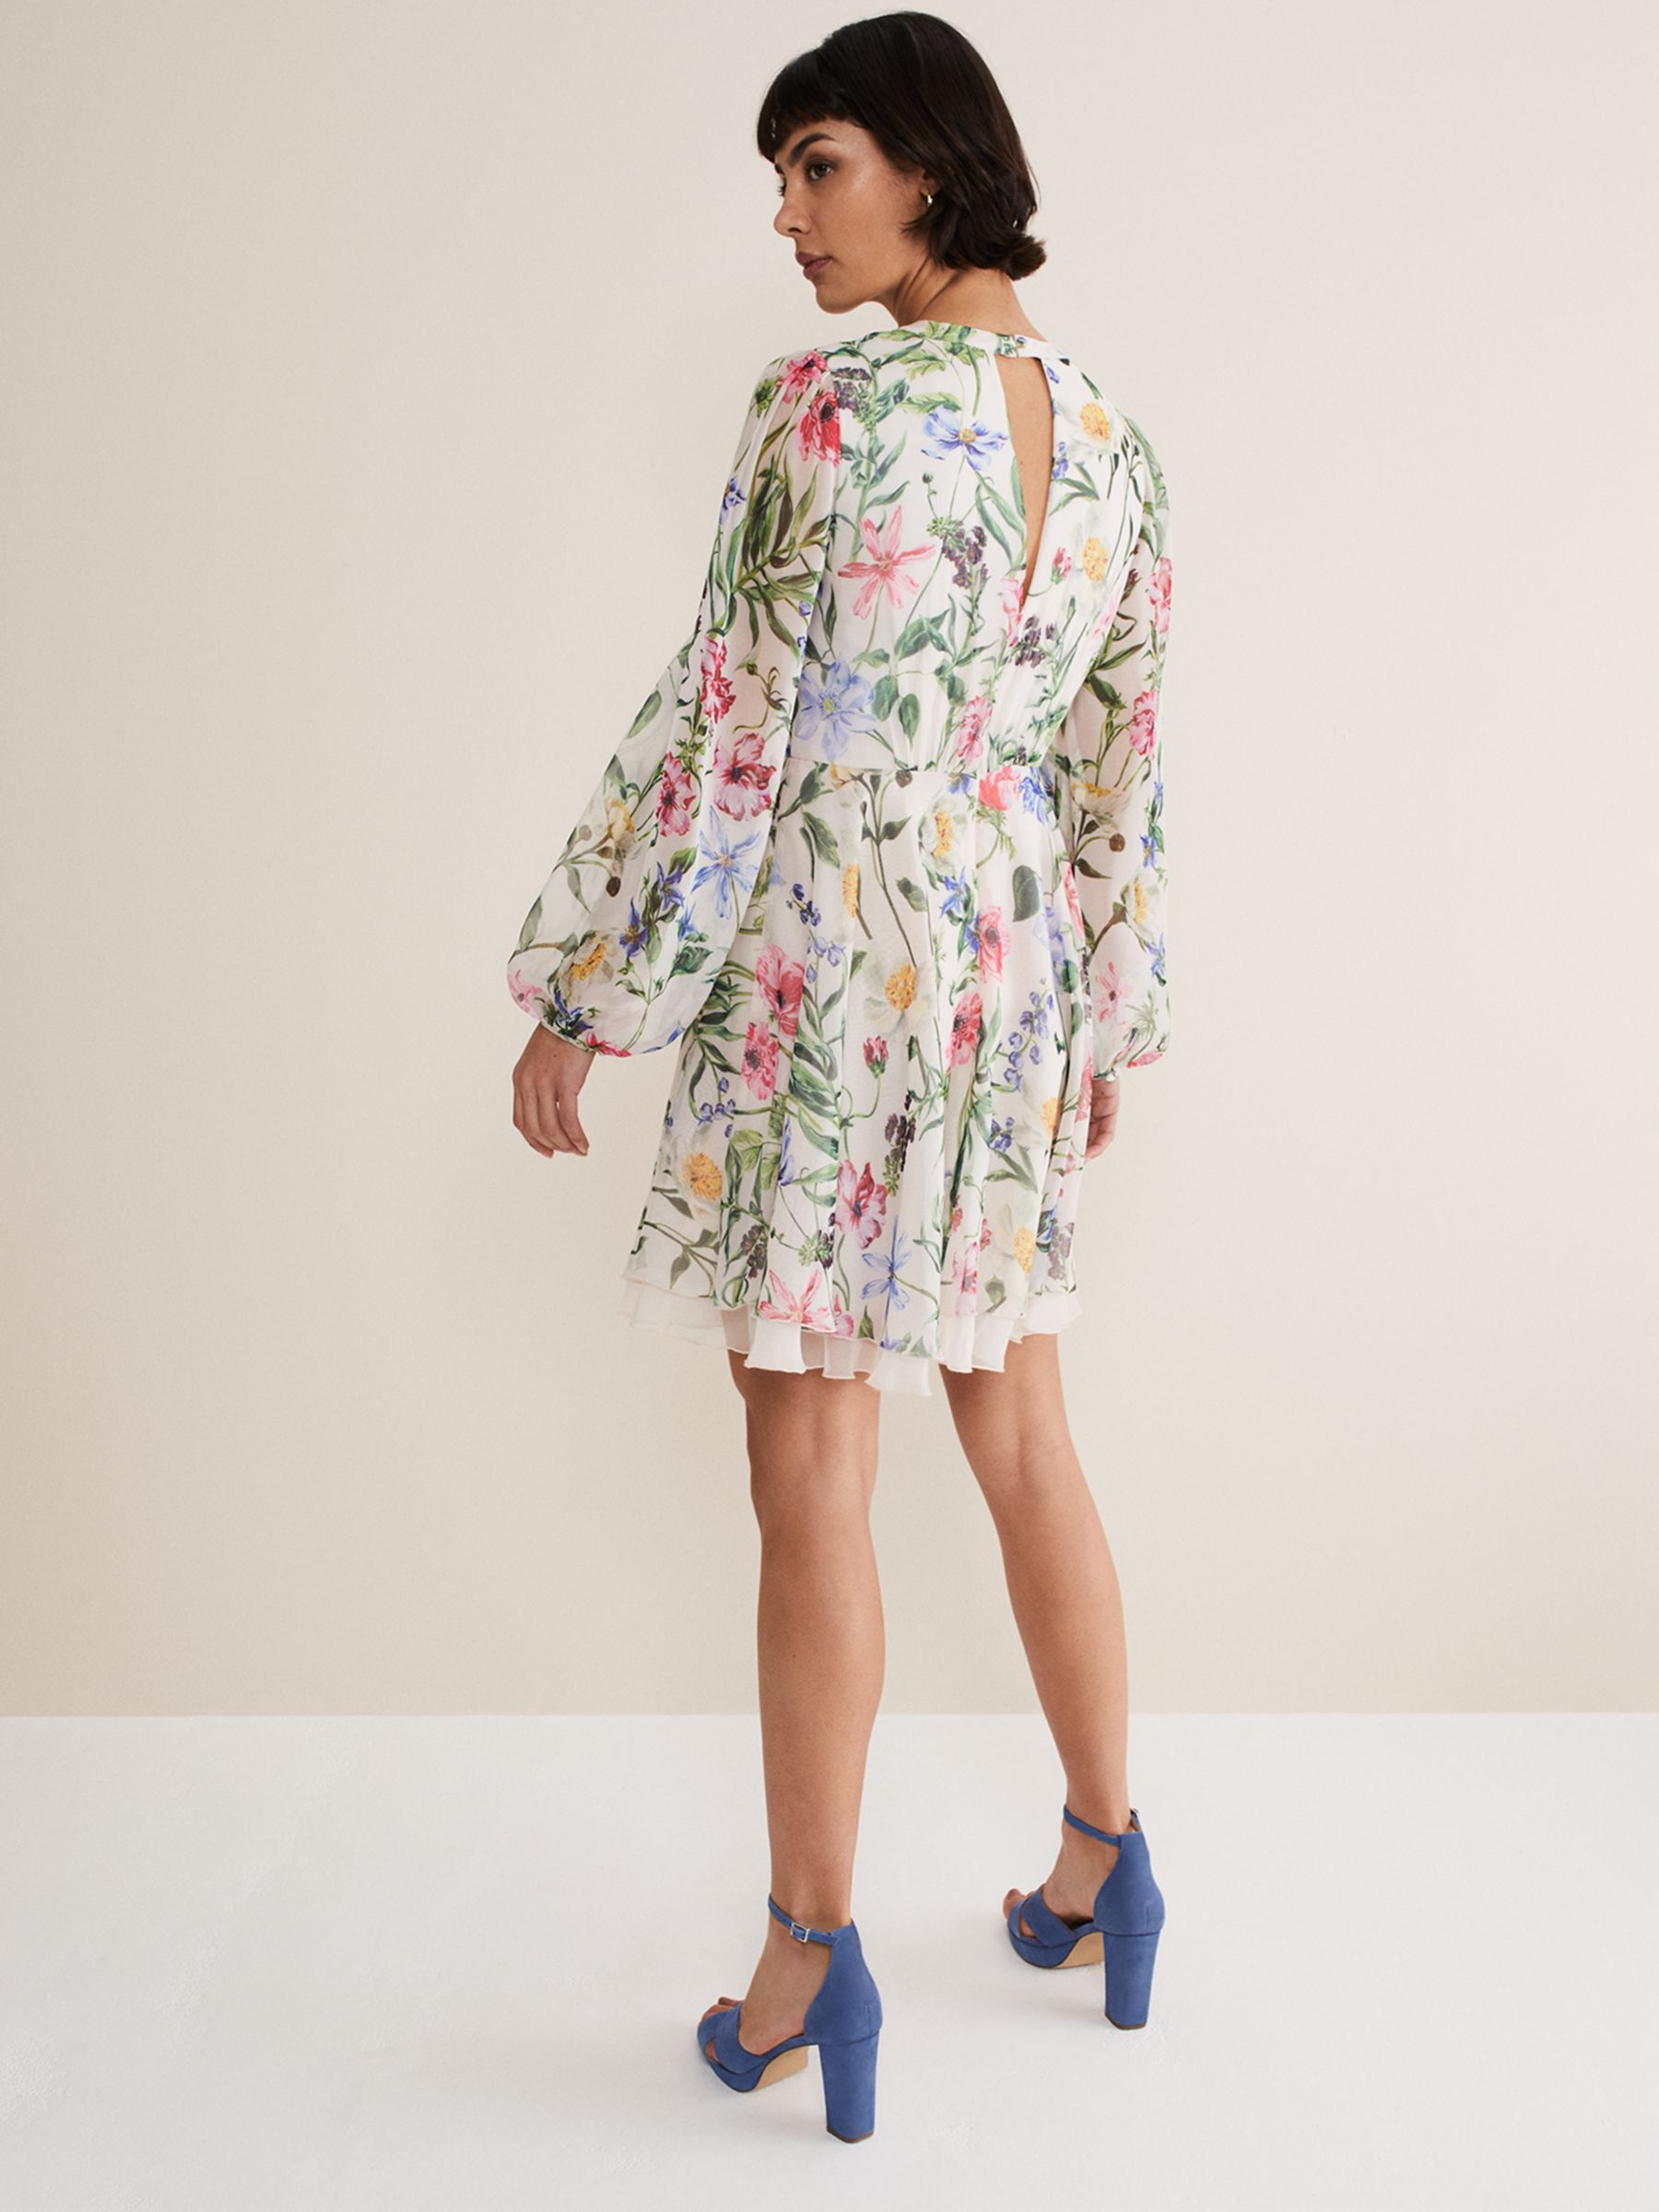 Phase Eight Everleigh Chiffon Floral Mini Dress, Ivory/Multi, 24